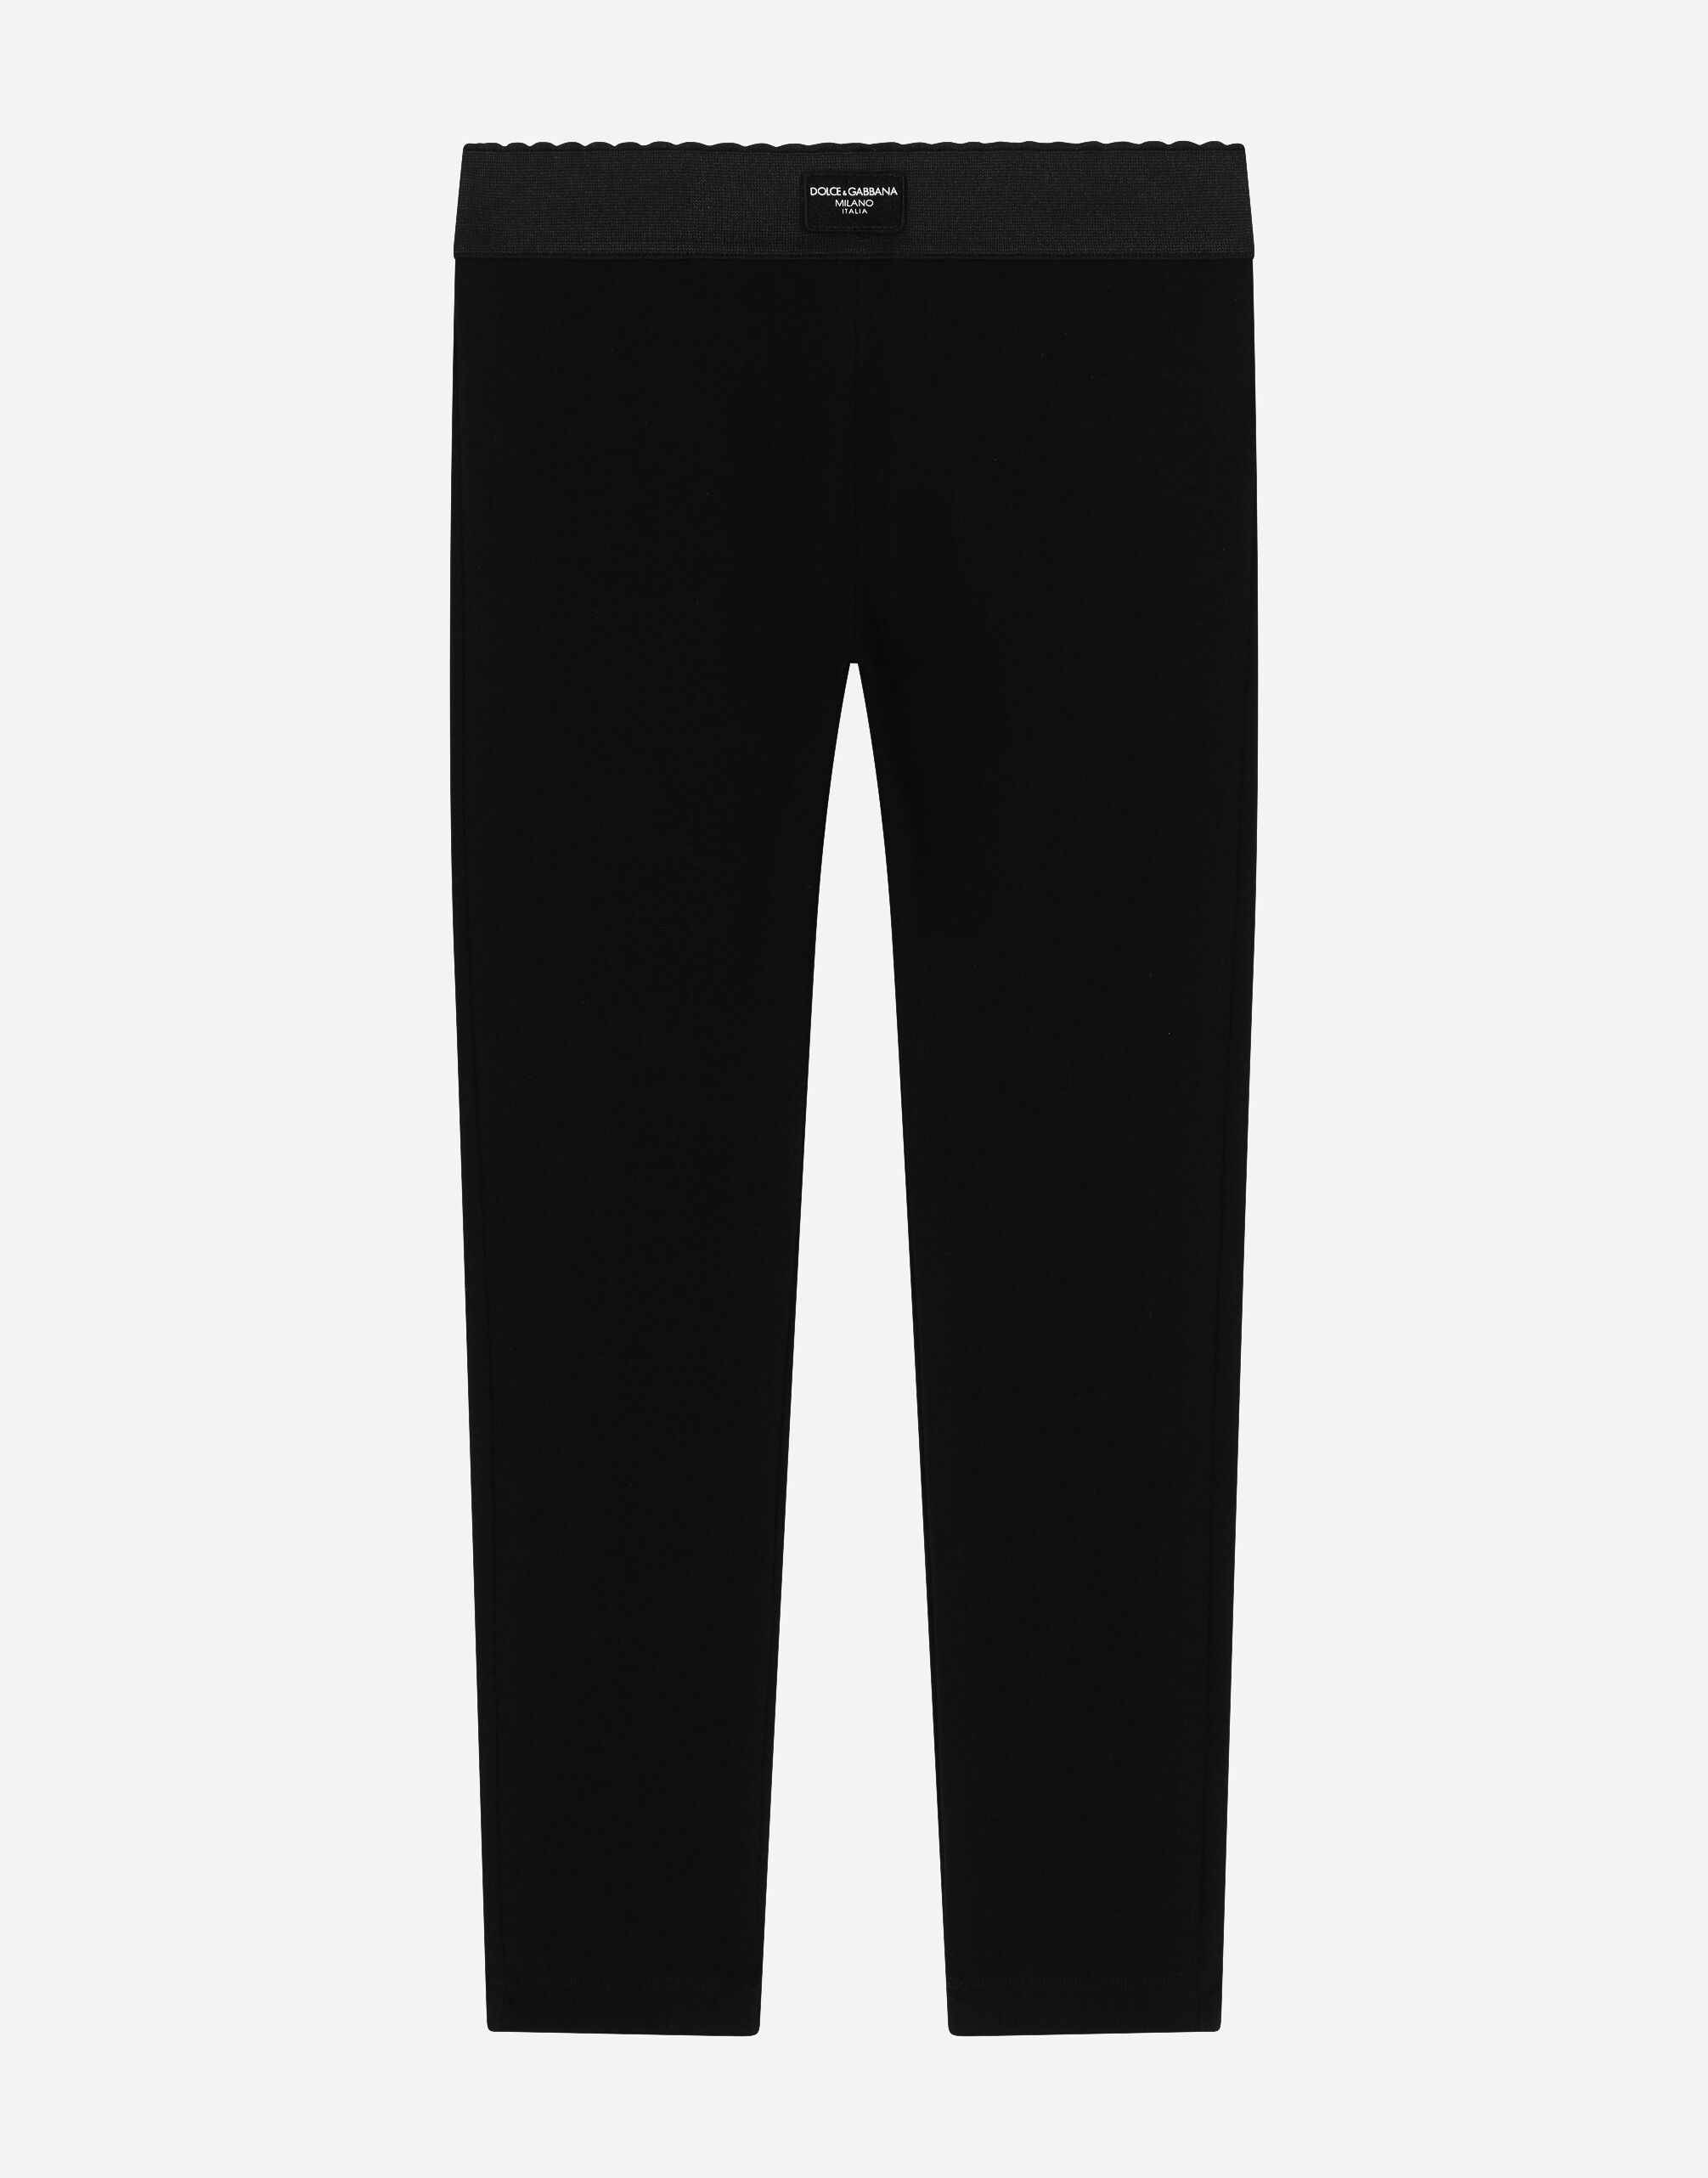 Dolce & Gabbana Jersey leggings with logo tag Print L55I27FI5JU